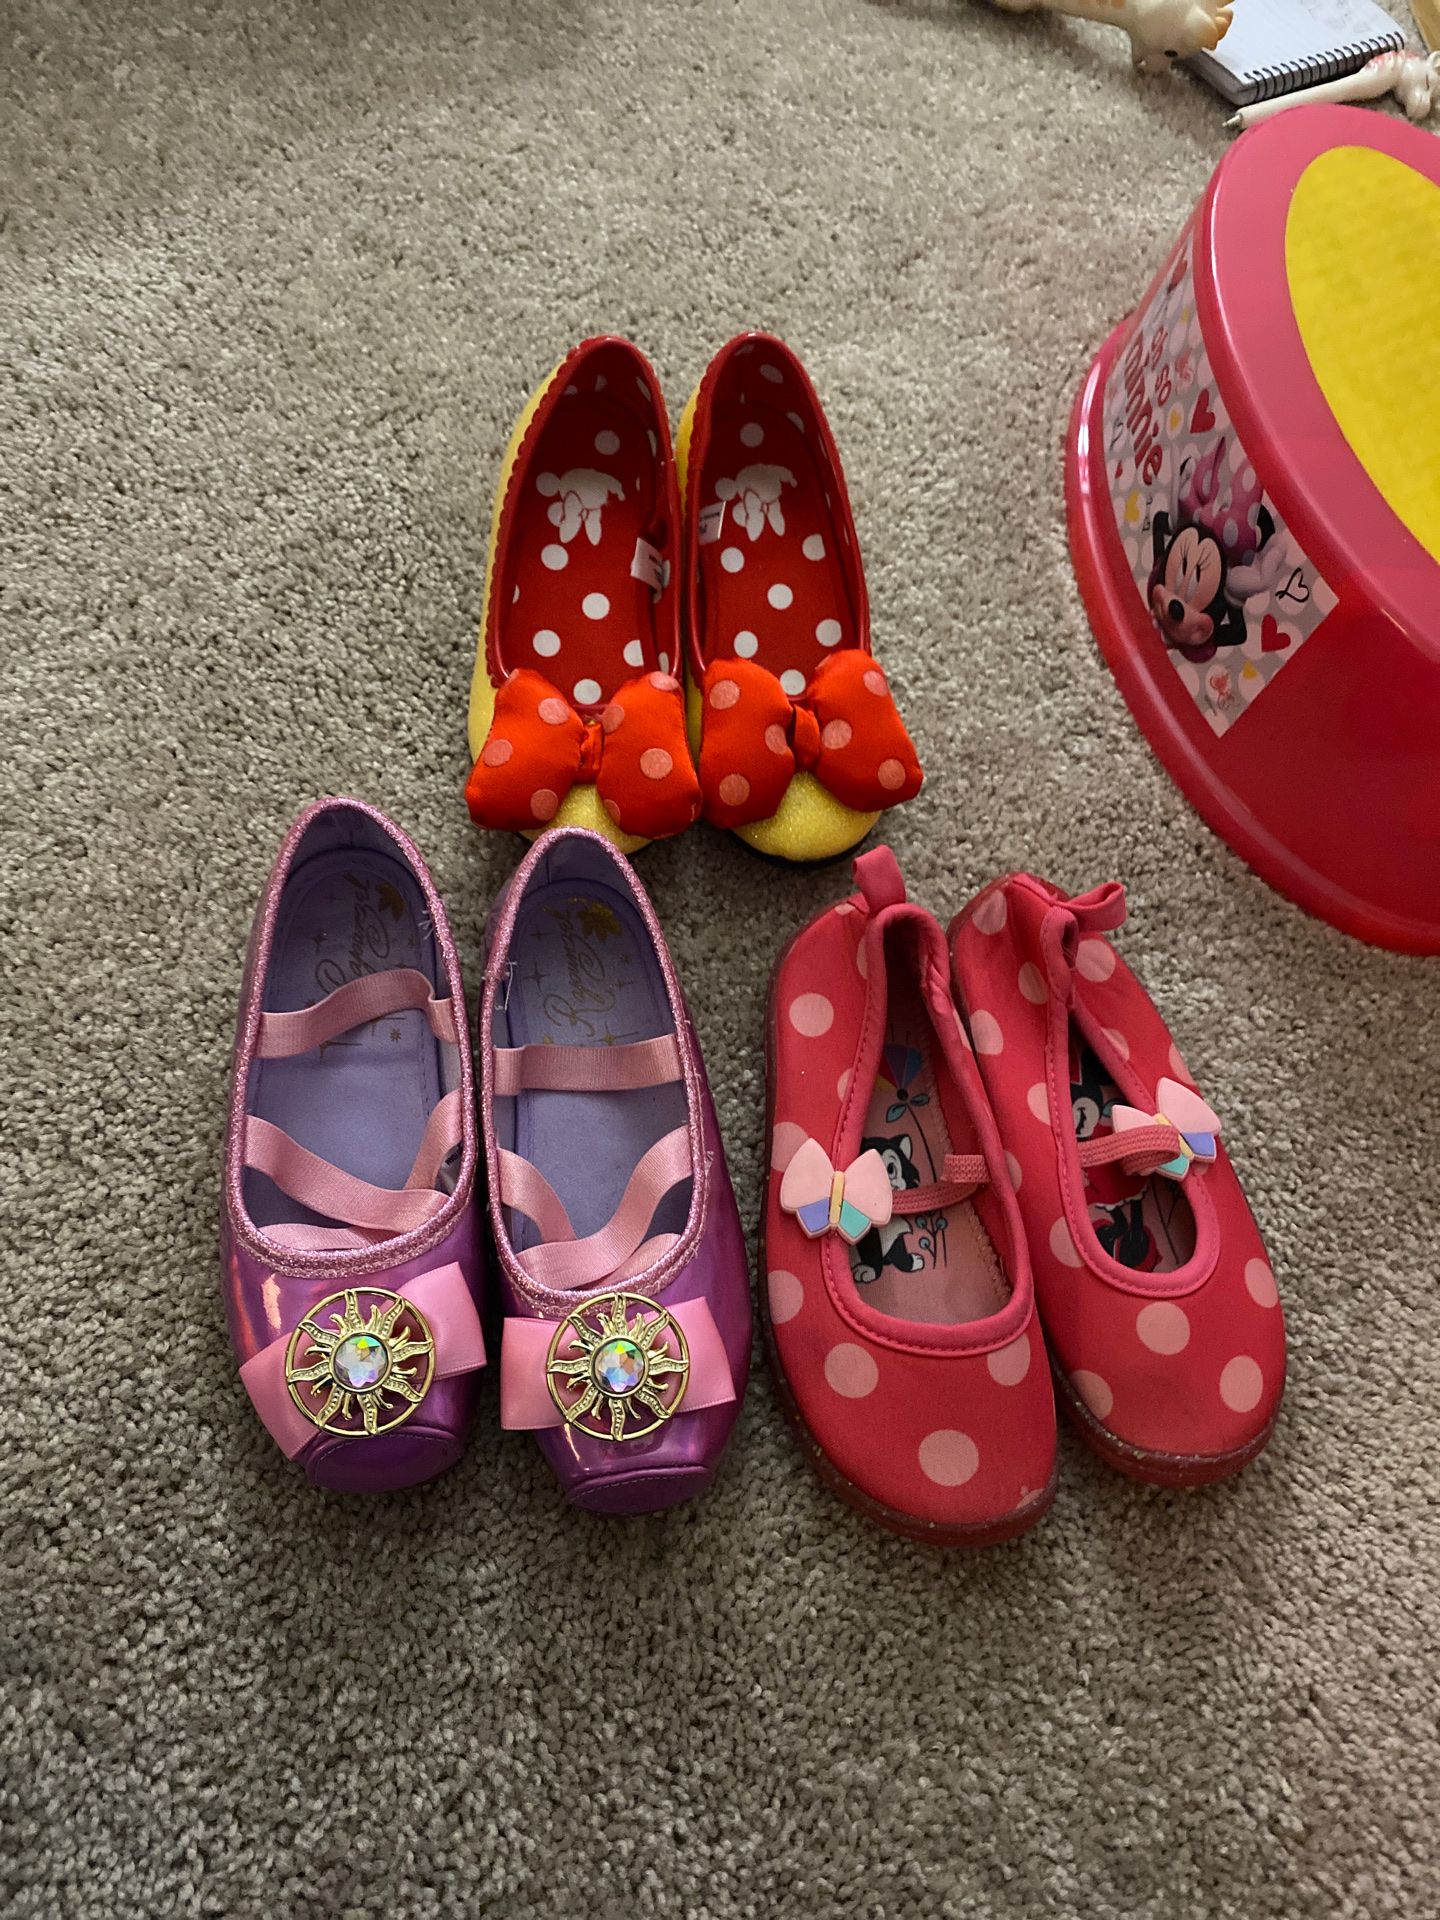 Toddler Disney shoes